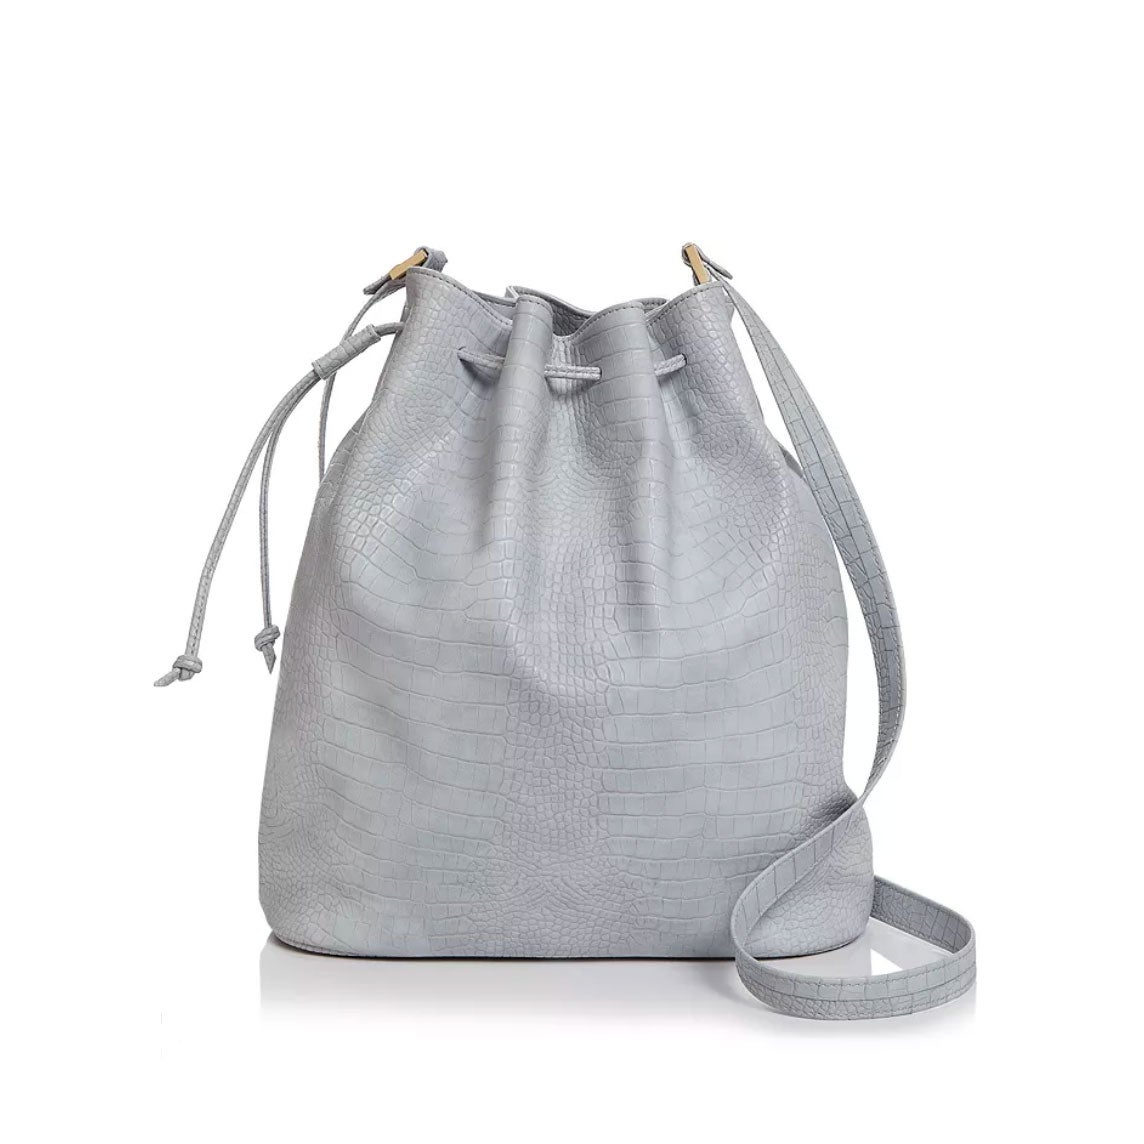 Trendy Handbags For Mom That Won't Break The Bank